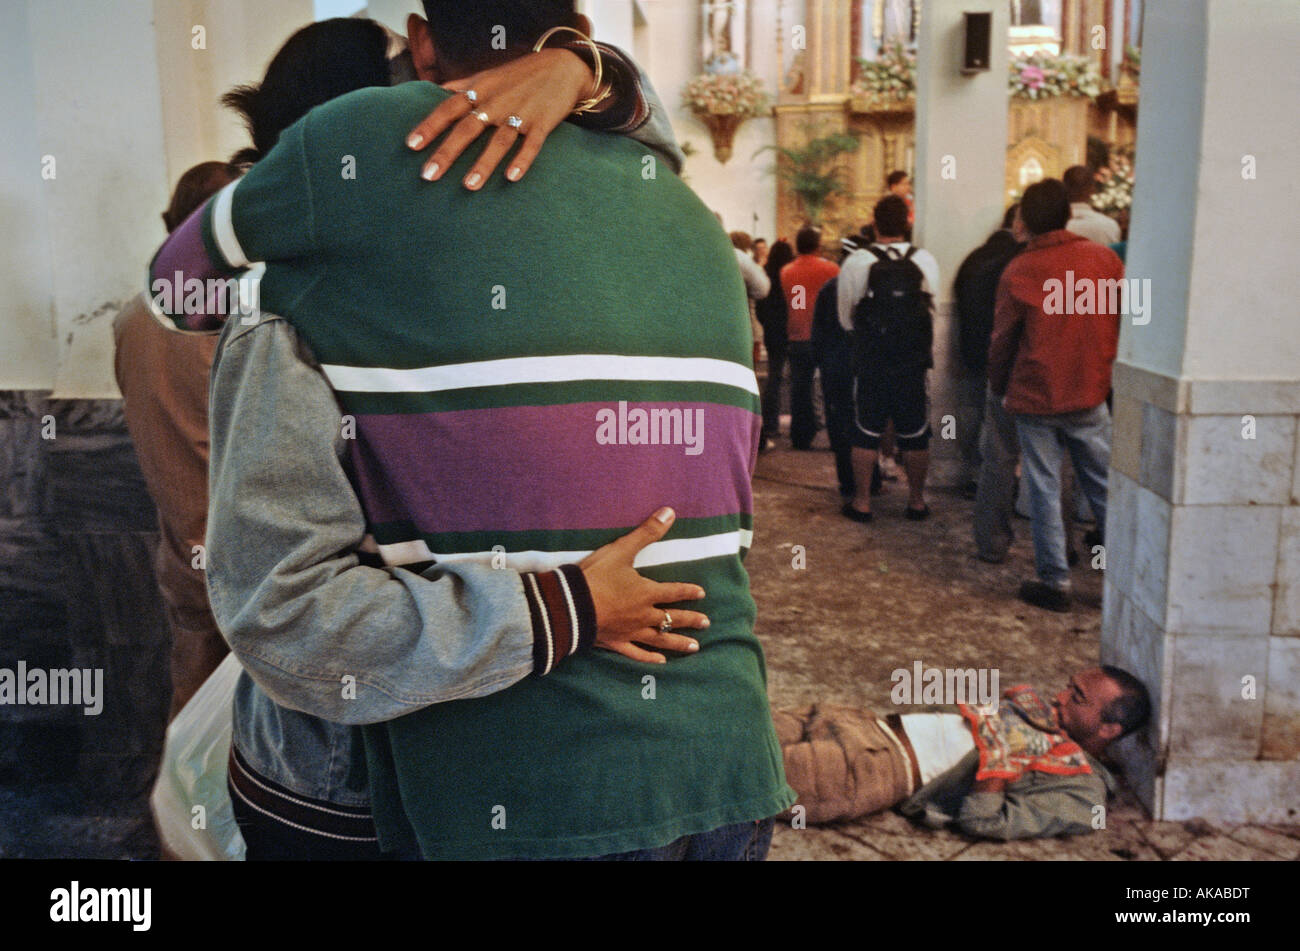 Couple embracing inside the shrine of St Lazarus. Rincon Cuba Stock Photo